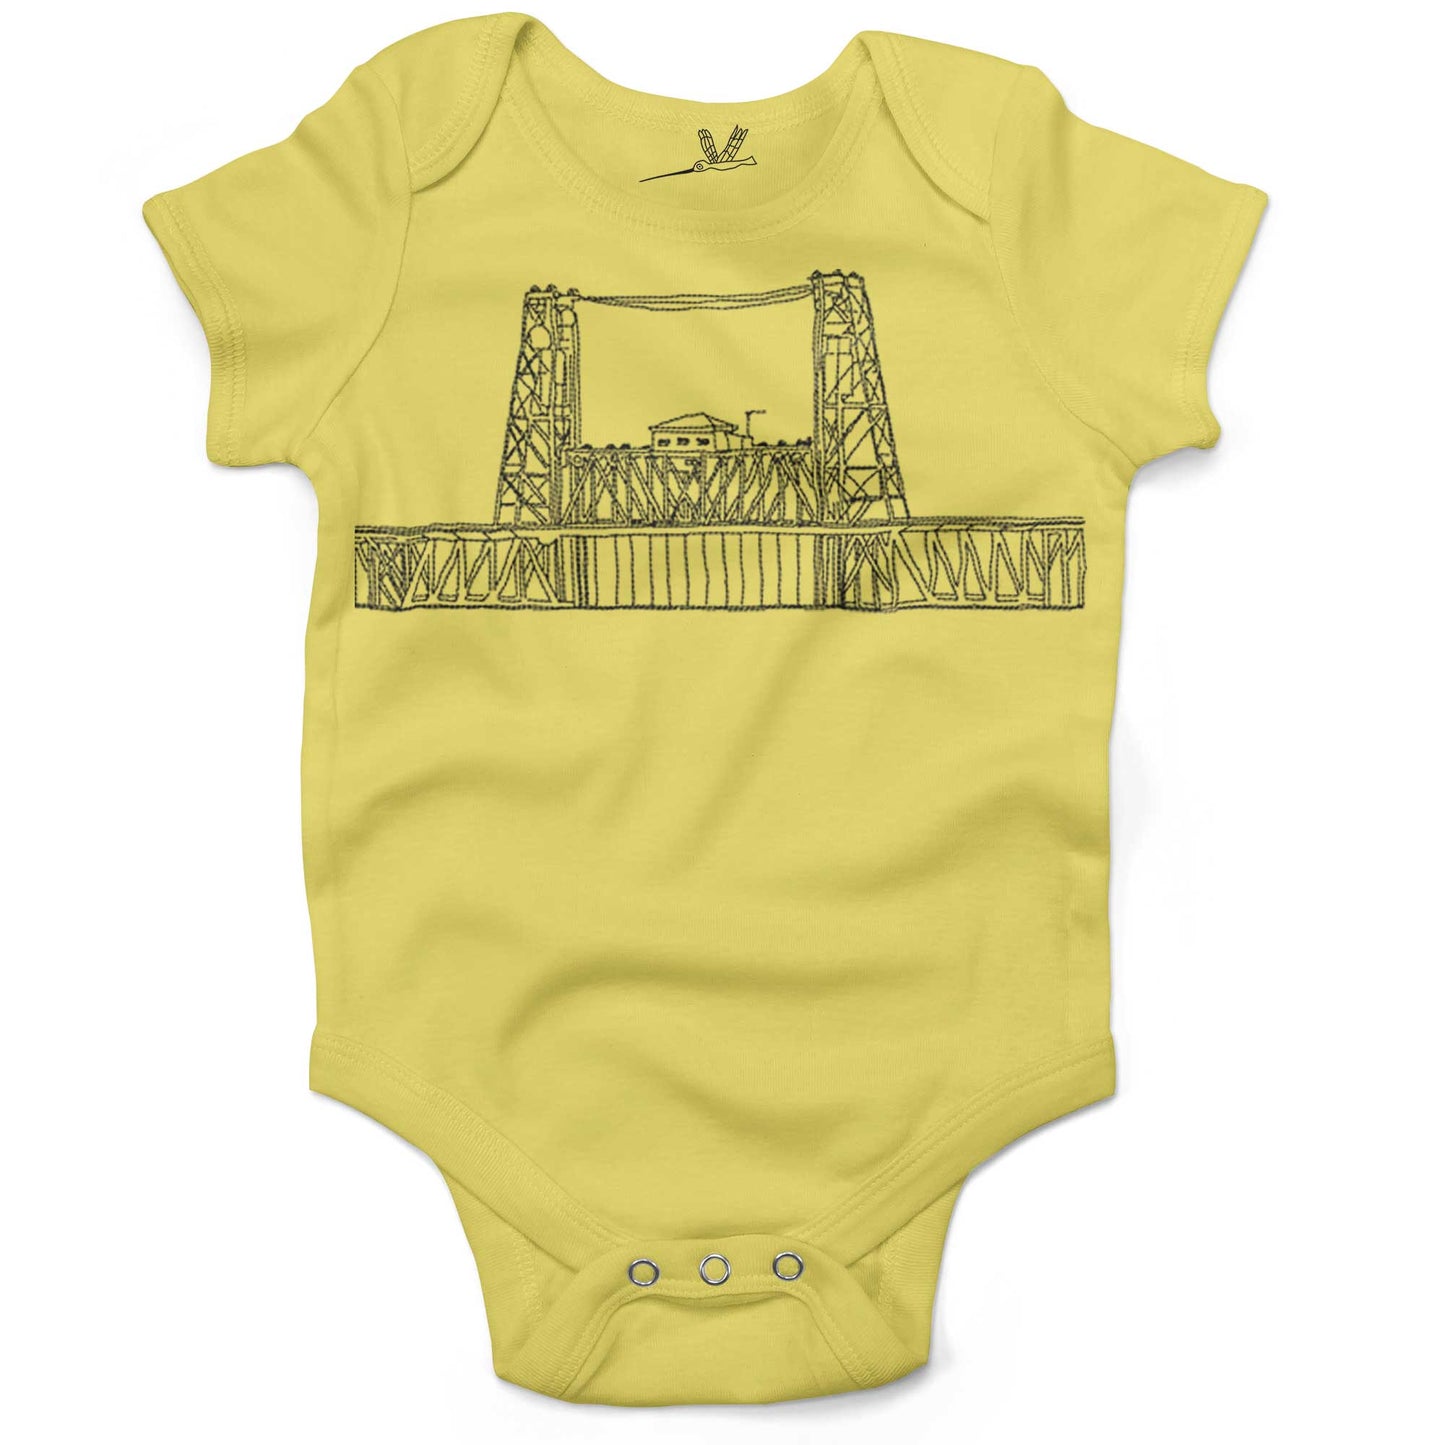 Steel Bridge Infant Bodysuit or Raglan Baby Tee-Yellow-3-6 months